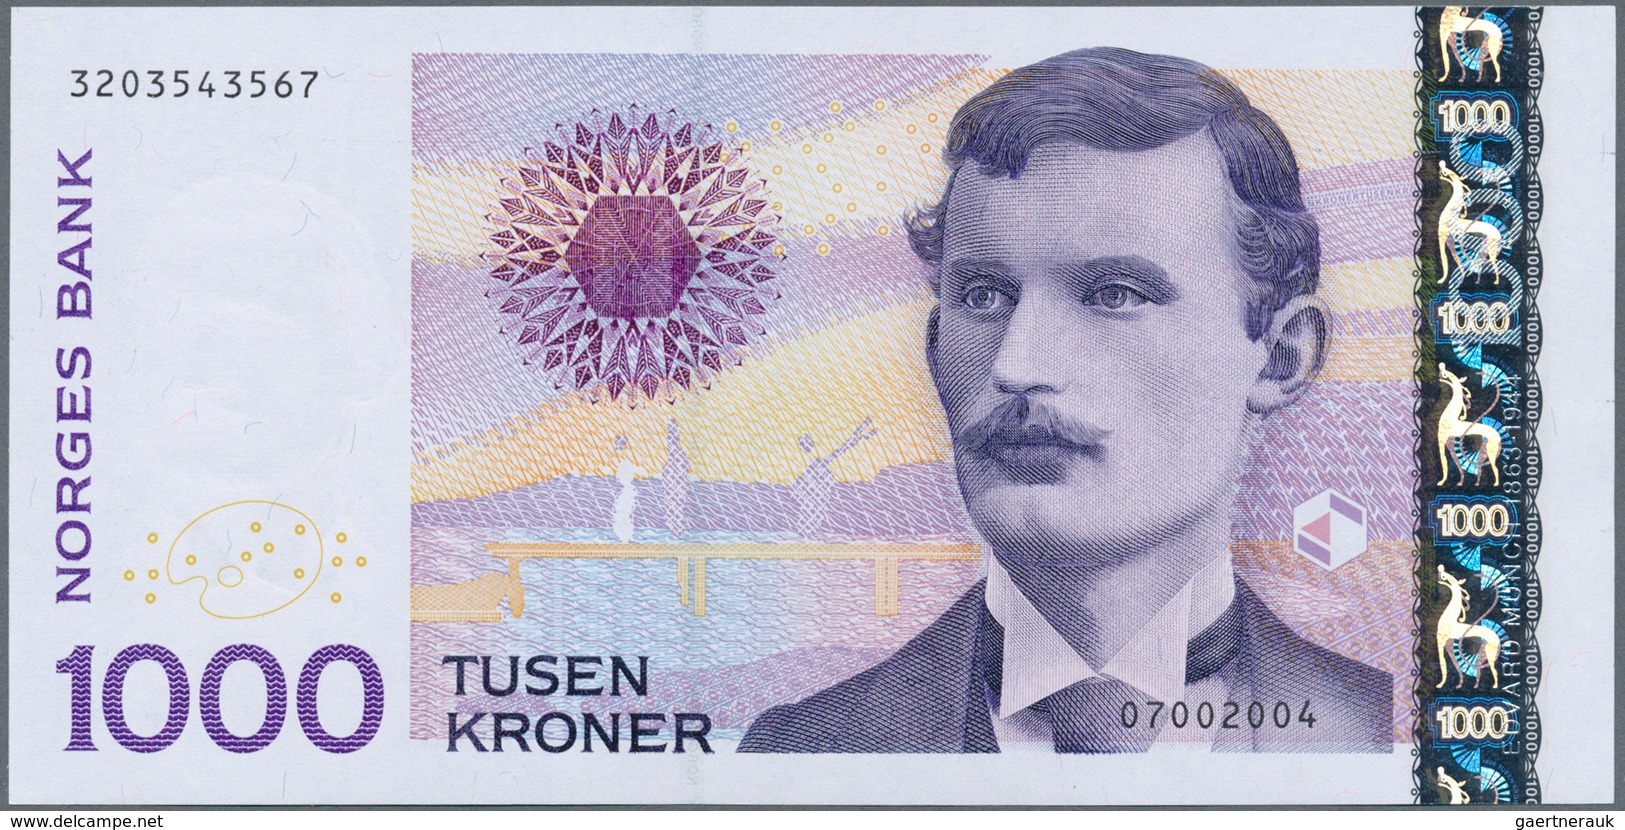 02175 Norway / Norwegen: 1000 Kroner 2004 P. 52 In Condition: UNC. - Noruega